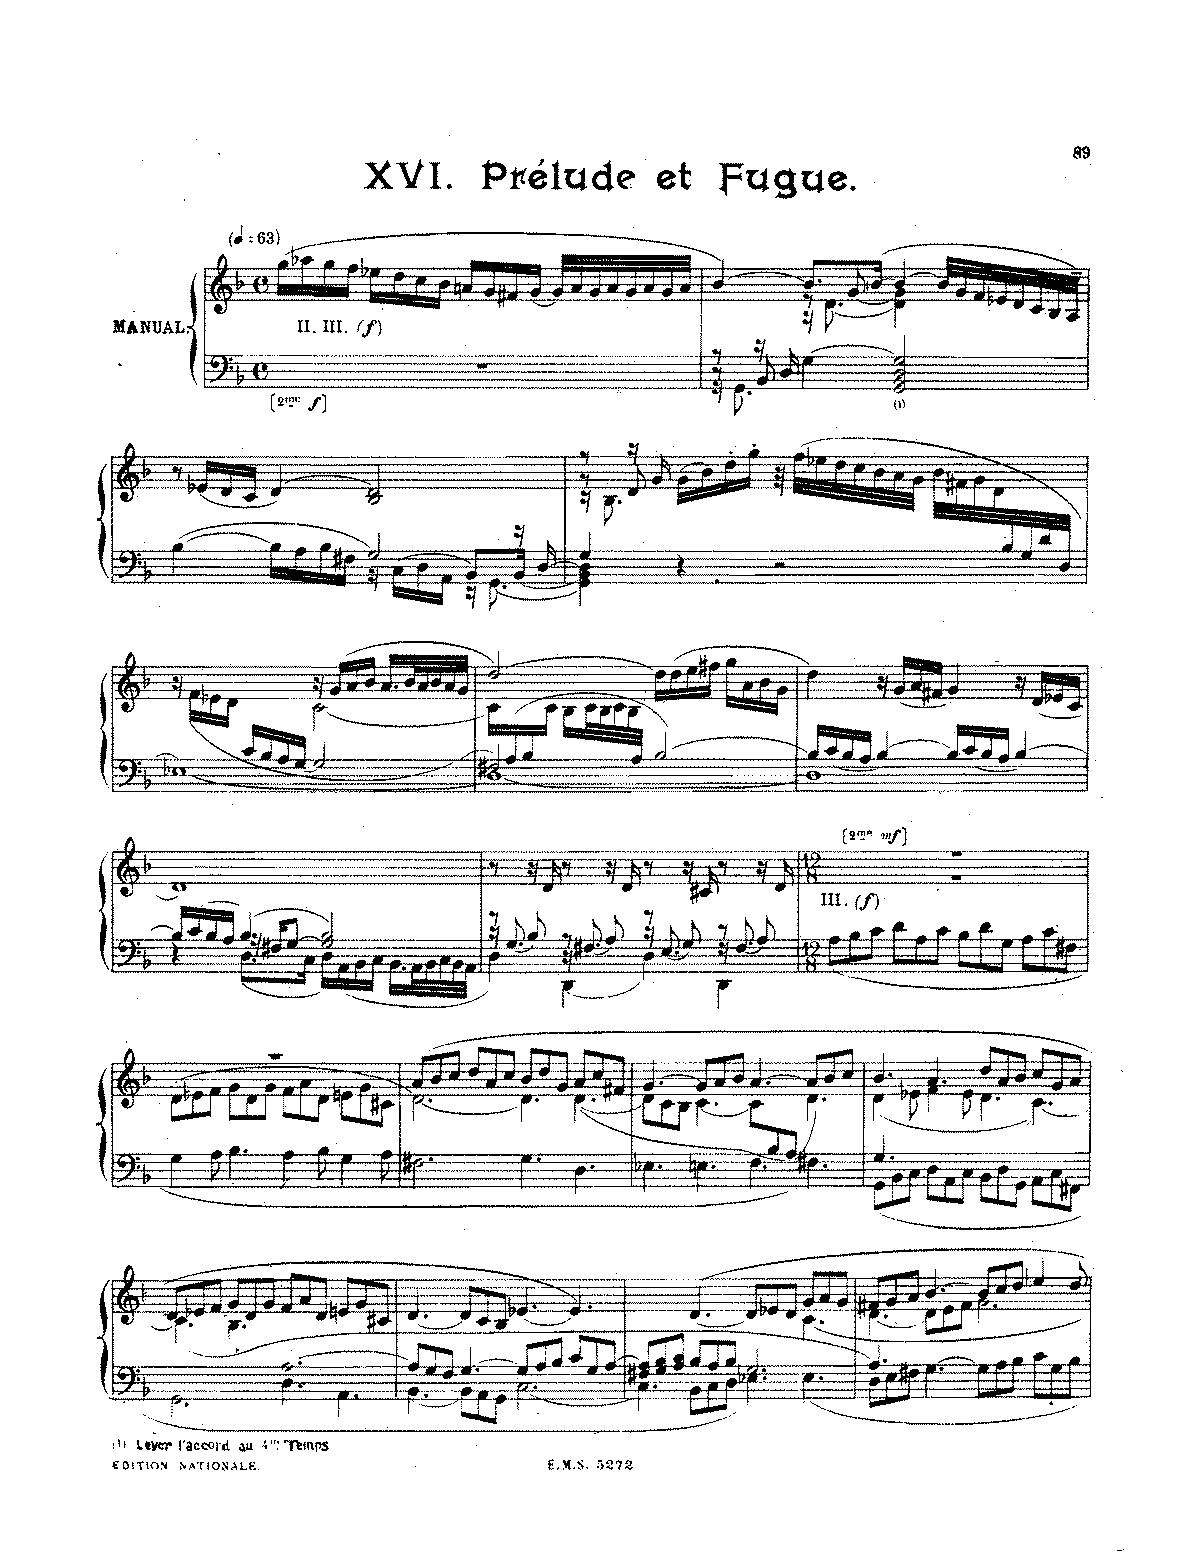 Prelude in G minor, BuxWV 163 (Buxtehude, Dietrich) - IMSLP